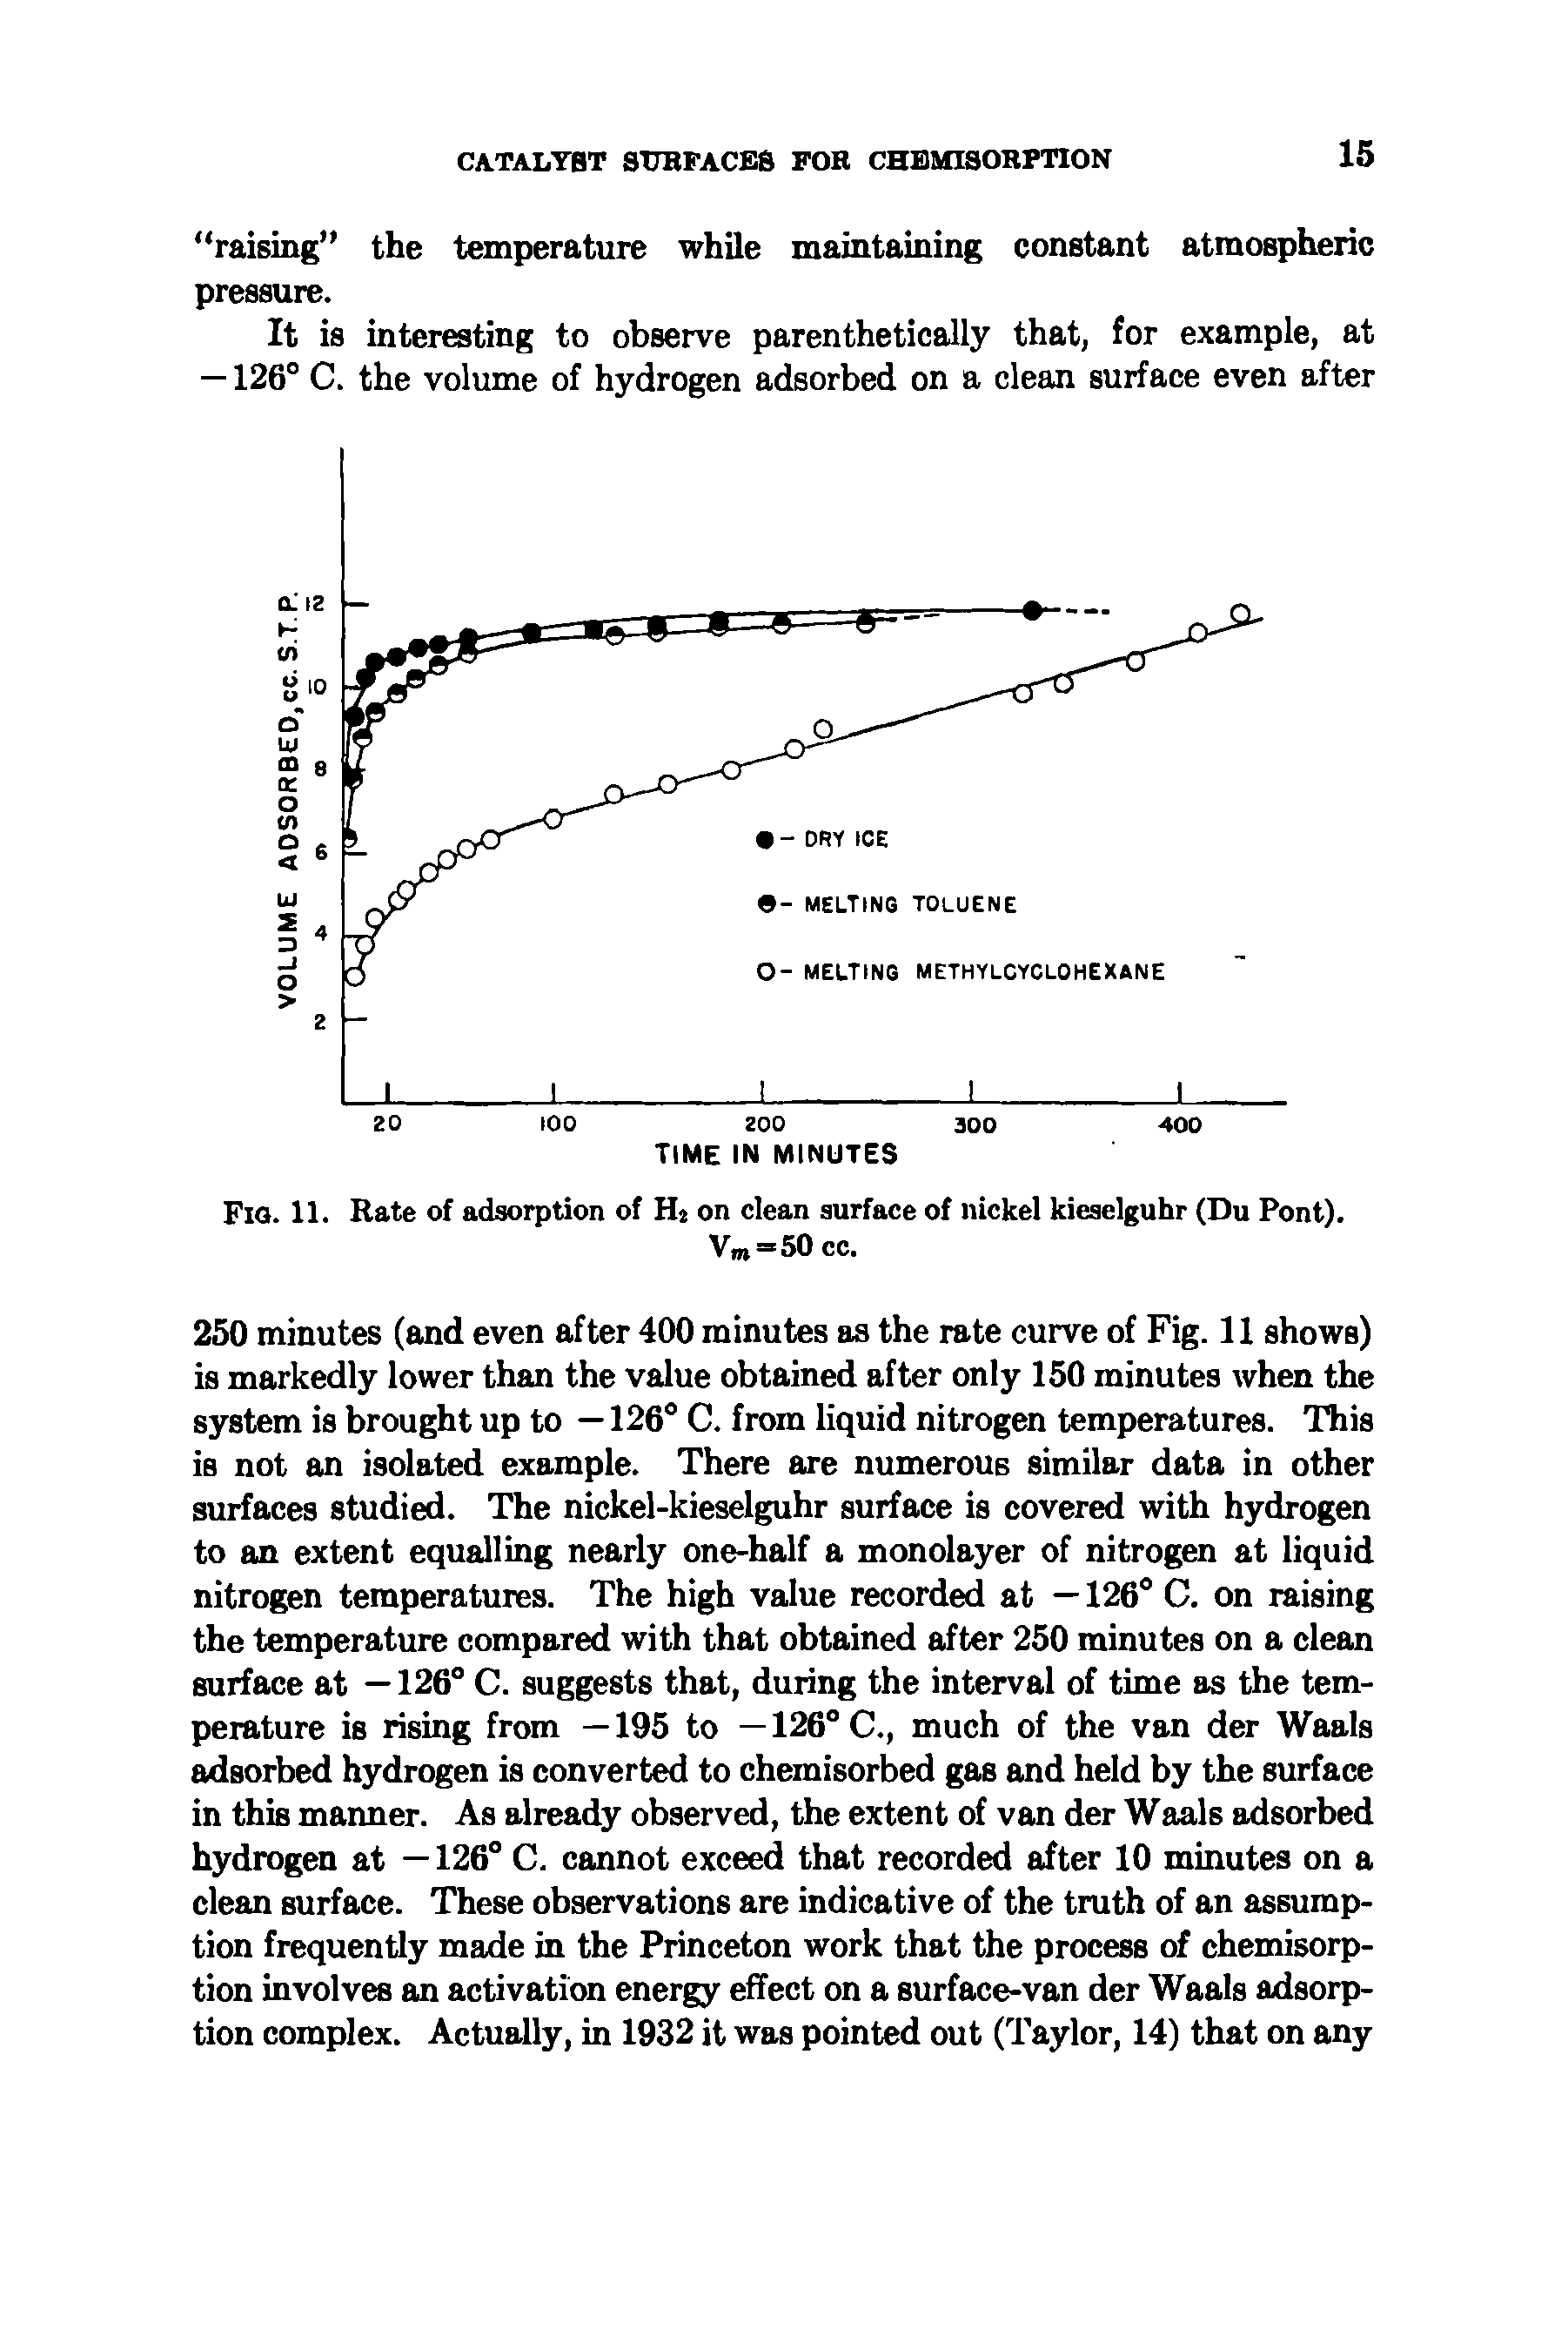 Fig. 11. Rate of adsorption of Hj on clean surface of nickel kieselguhr (Du Pont).